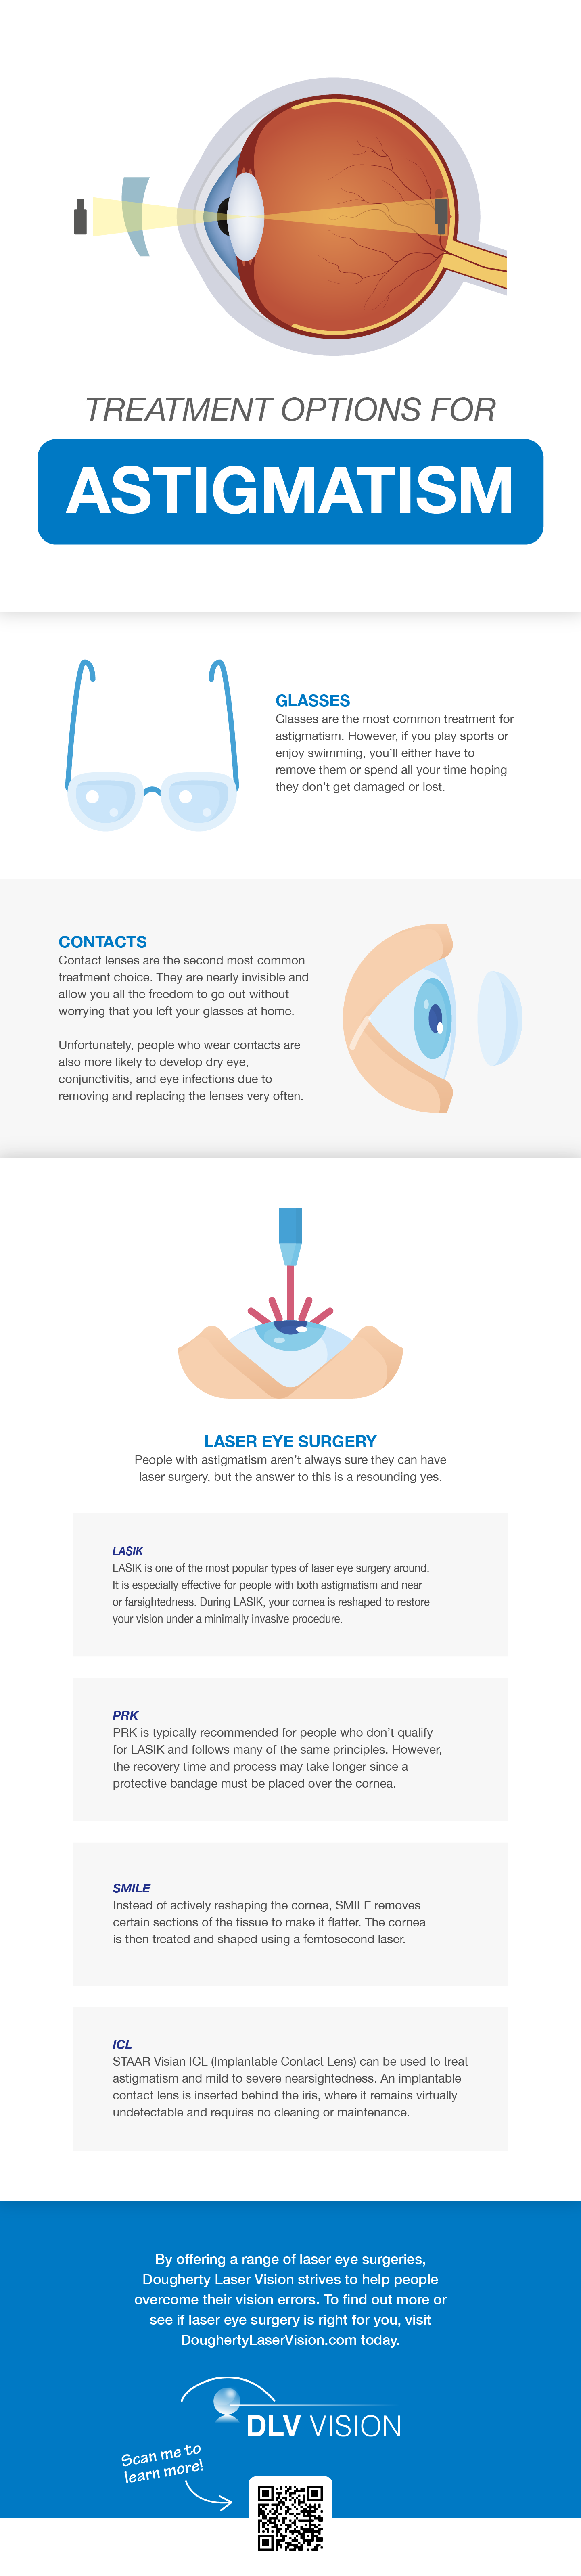 treatment for astigmatism at DLV Vision